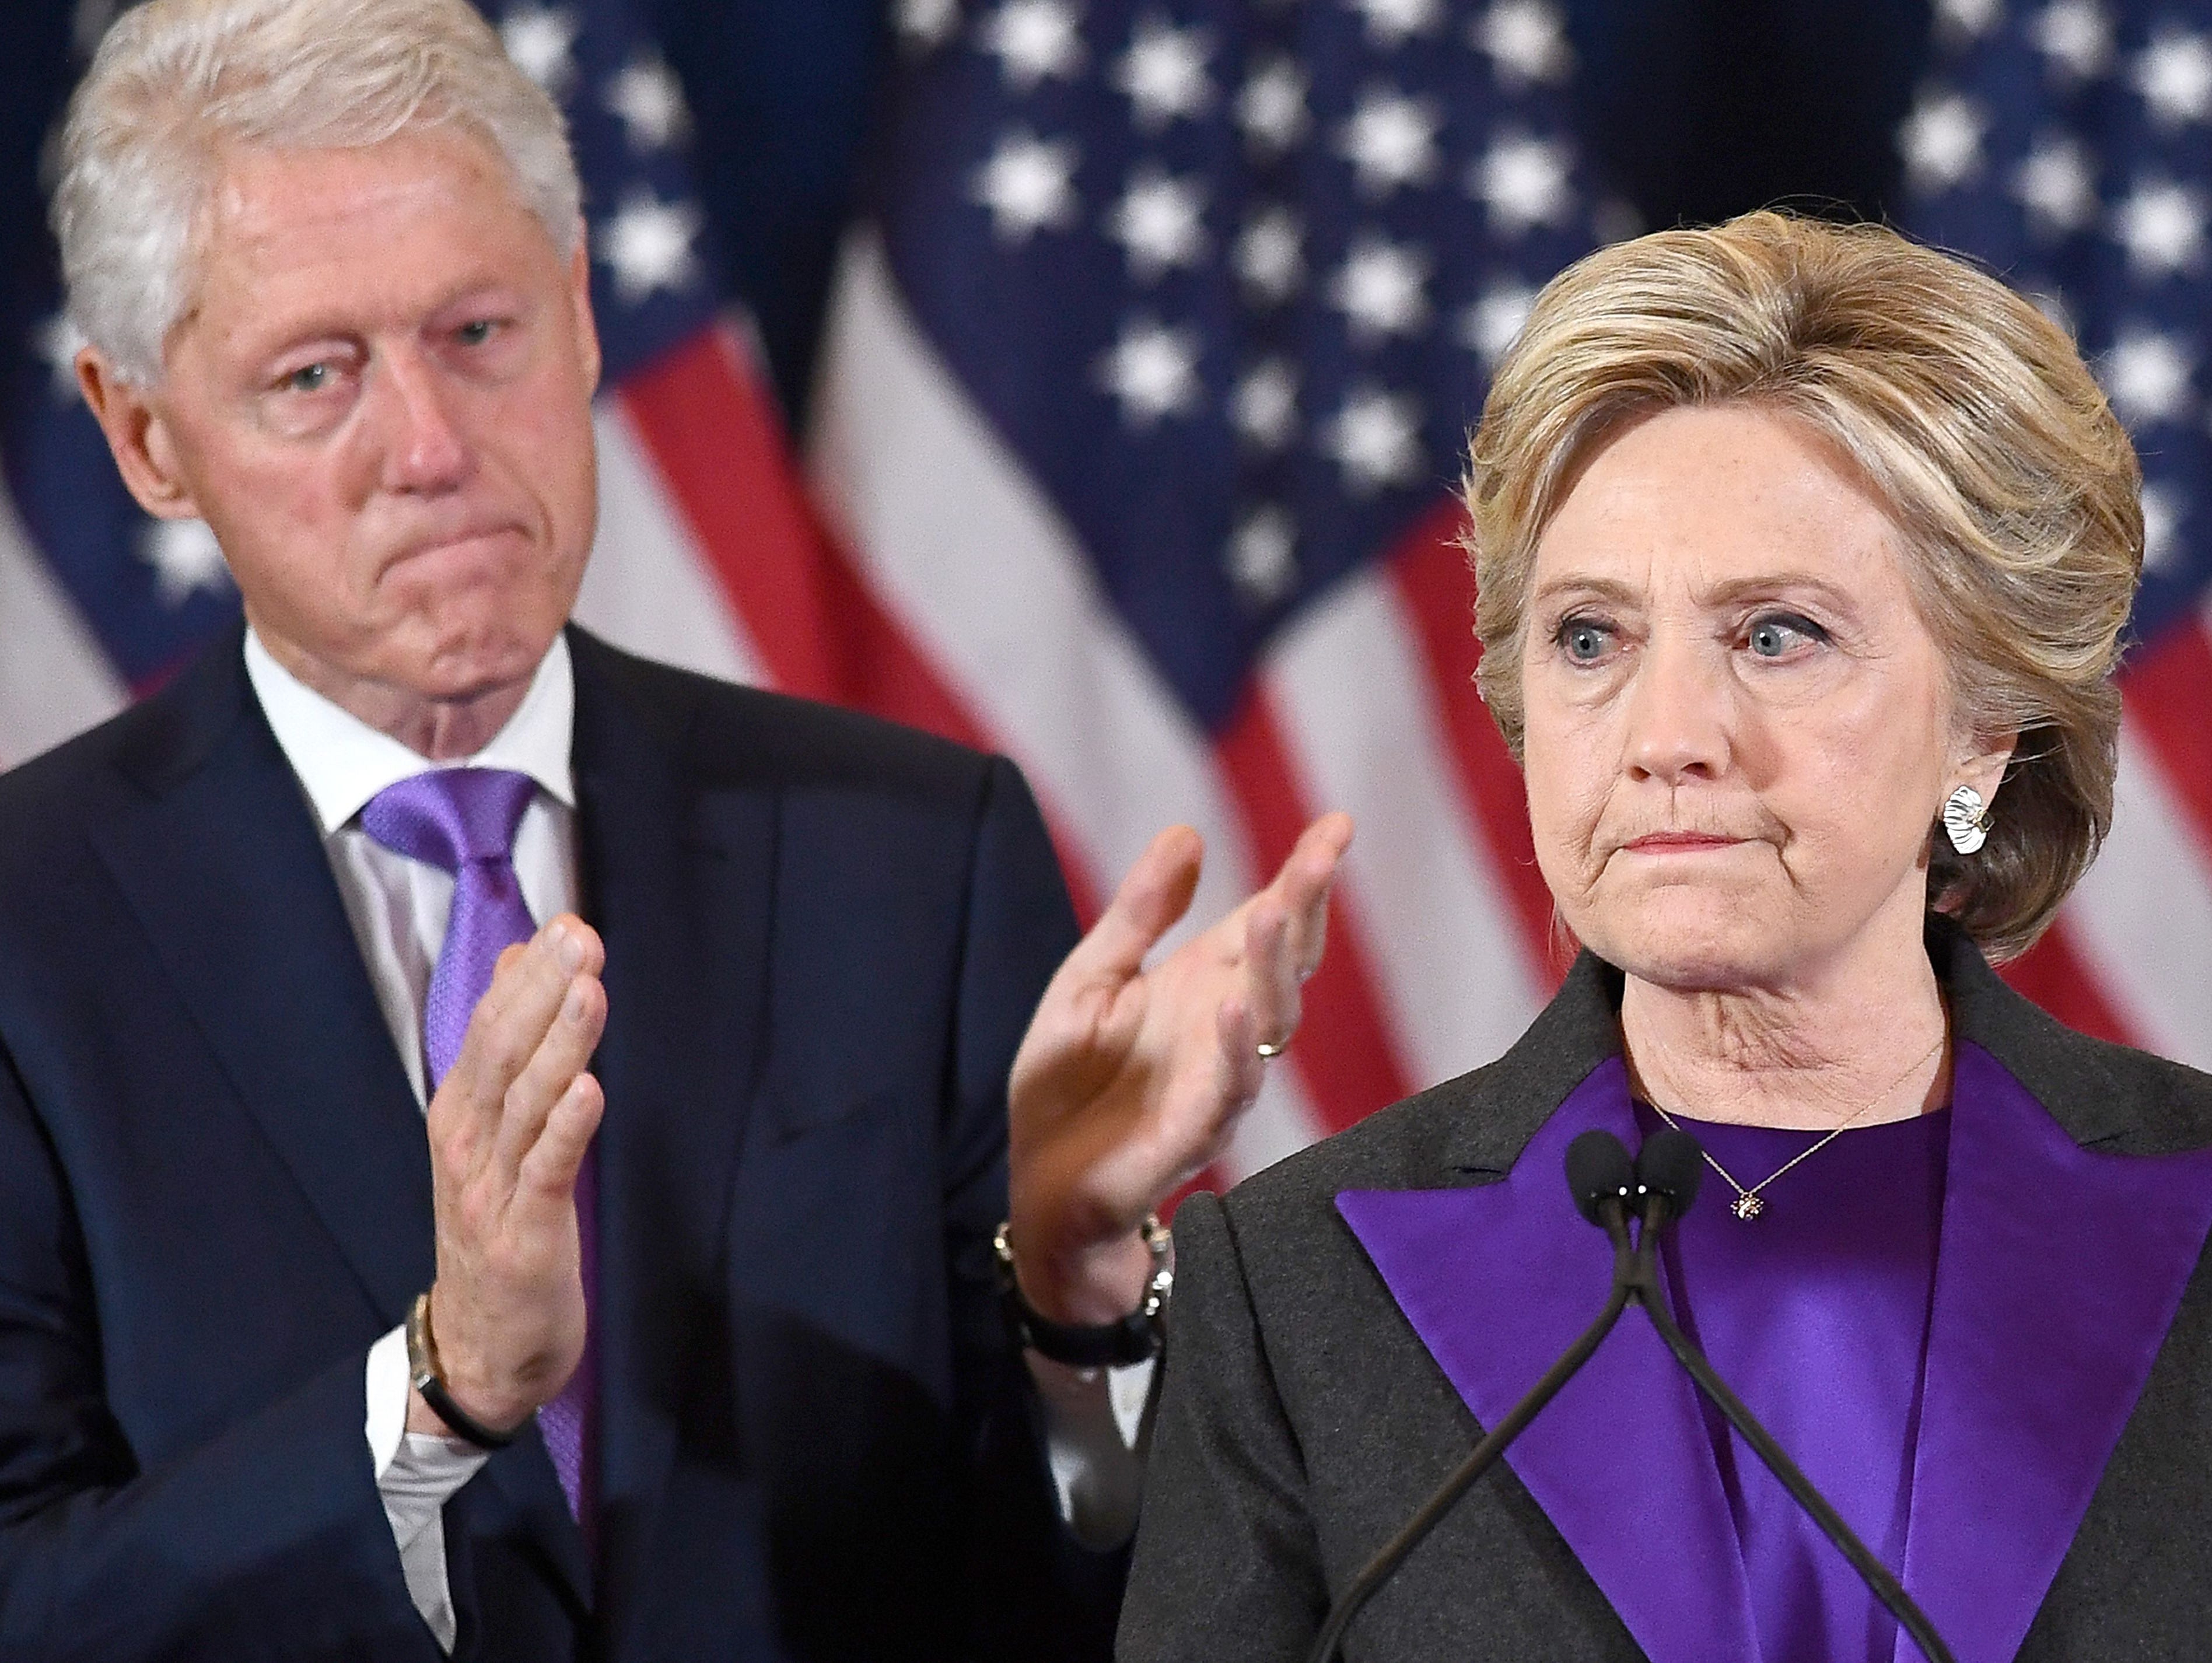 Hillary Clinton with Bill Clinton in New York on Nov. 9, 2016.